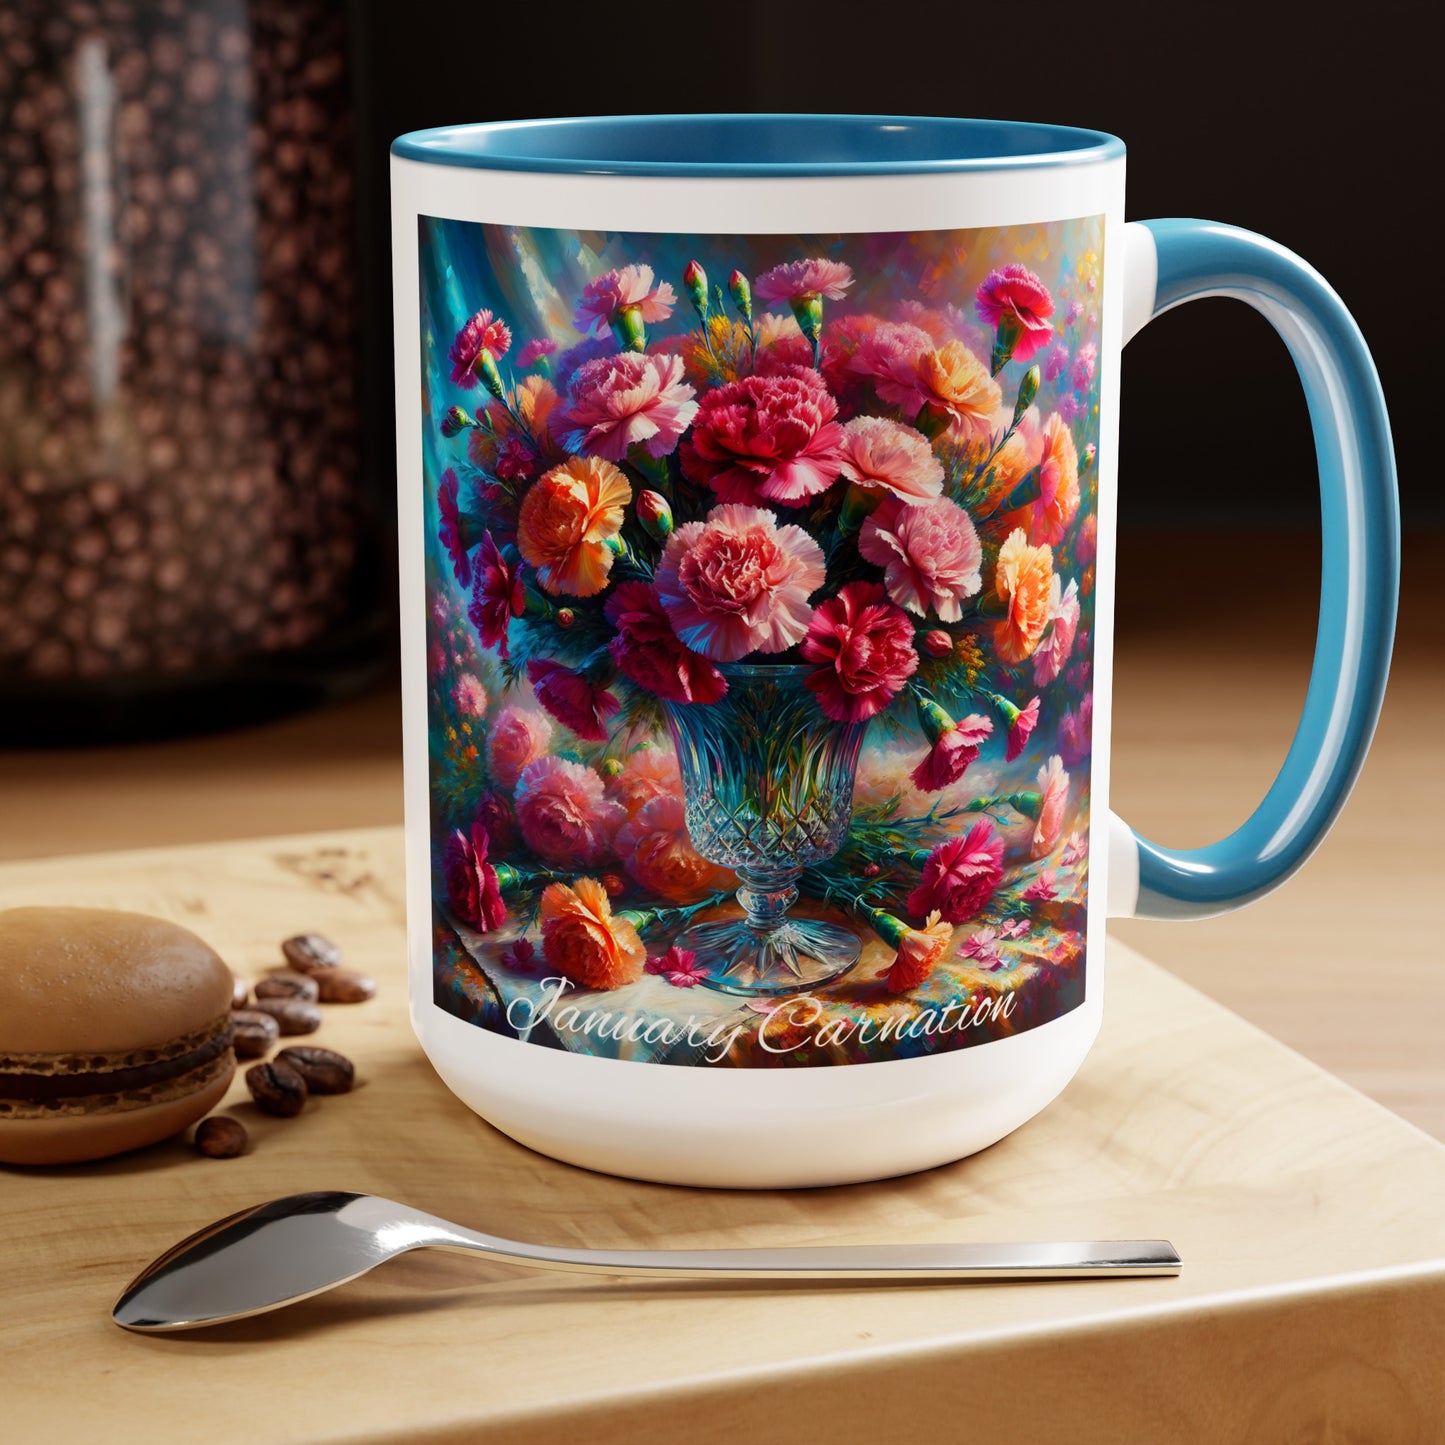 15oz January Carnation Coffee Mug a great gift for anyone born in January